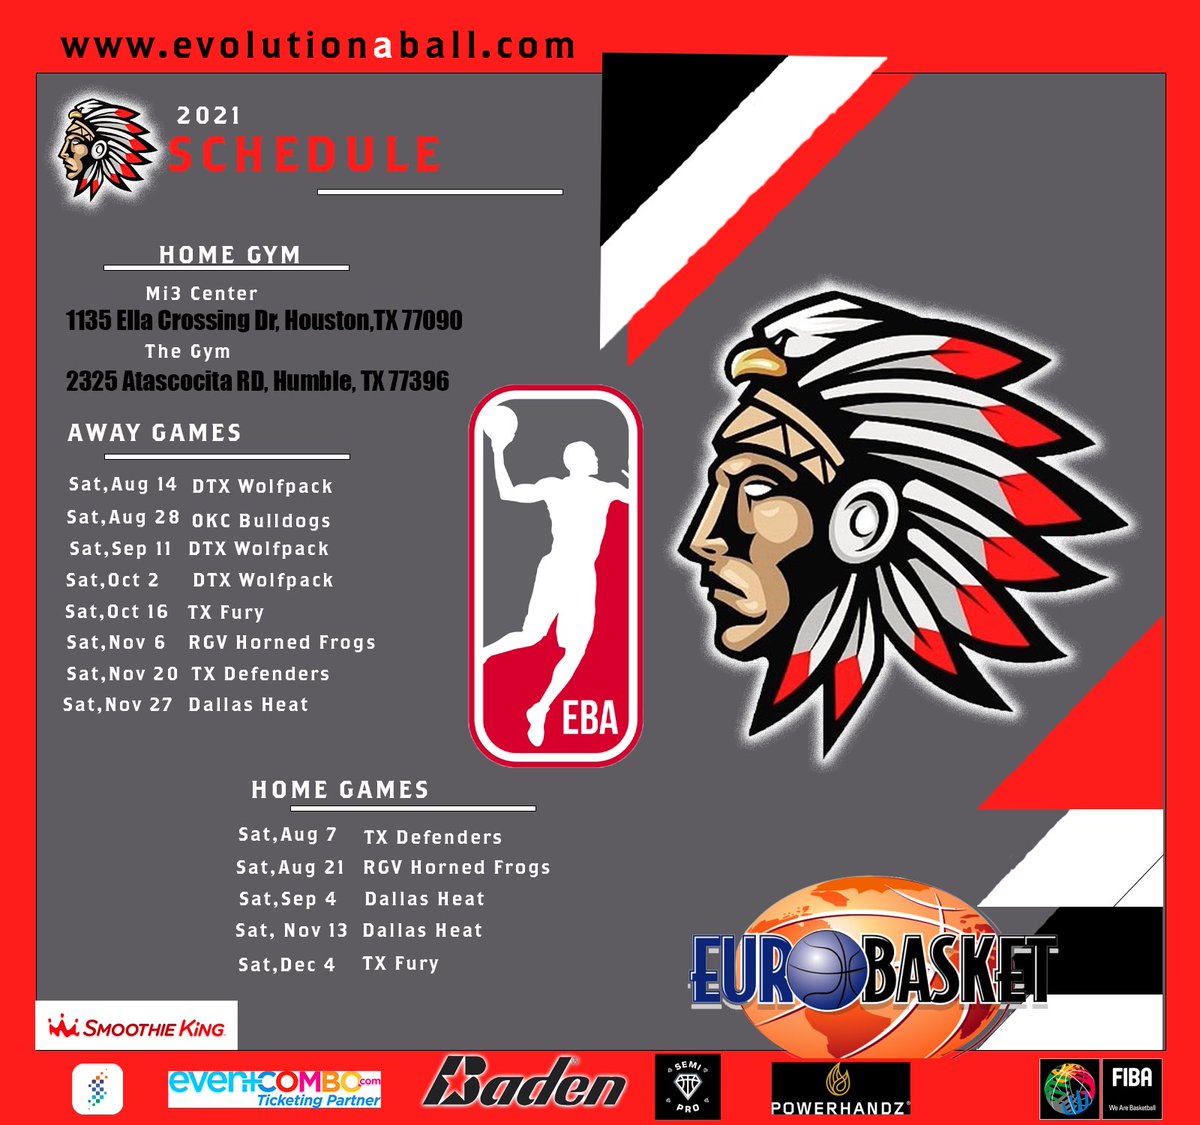 Start of the Inaugural Season is here! Here are individual schedules

#evoyourgame
#evoaball #eba #explorepage  #nbagleague #fiba #eurobasket #ebatv #dallas #dfw #dalheatup #wolfpack #aaw #txdefenders #okcbulldogs #txtribe #txfury #fyp #denver #rgv #basketball #ebausa #evoanews